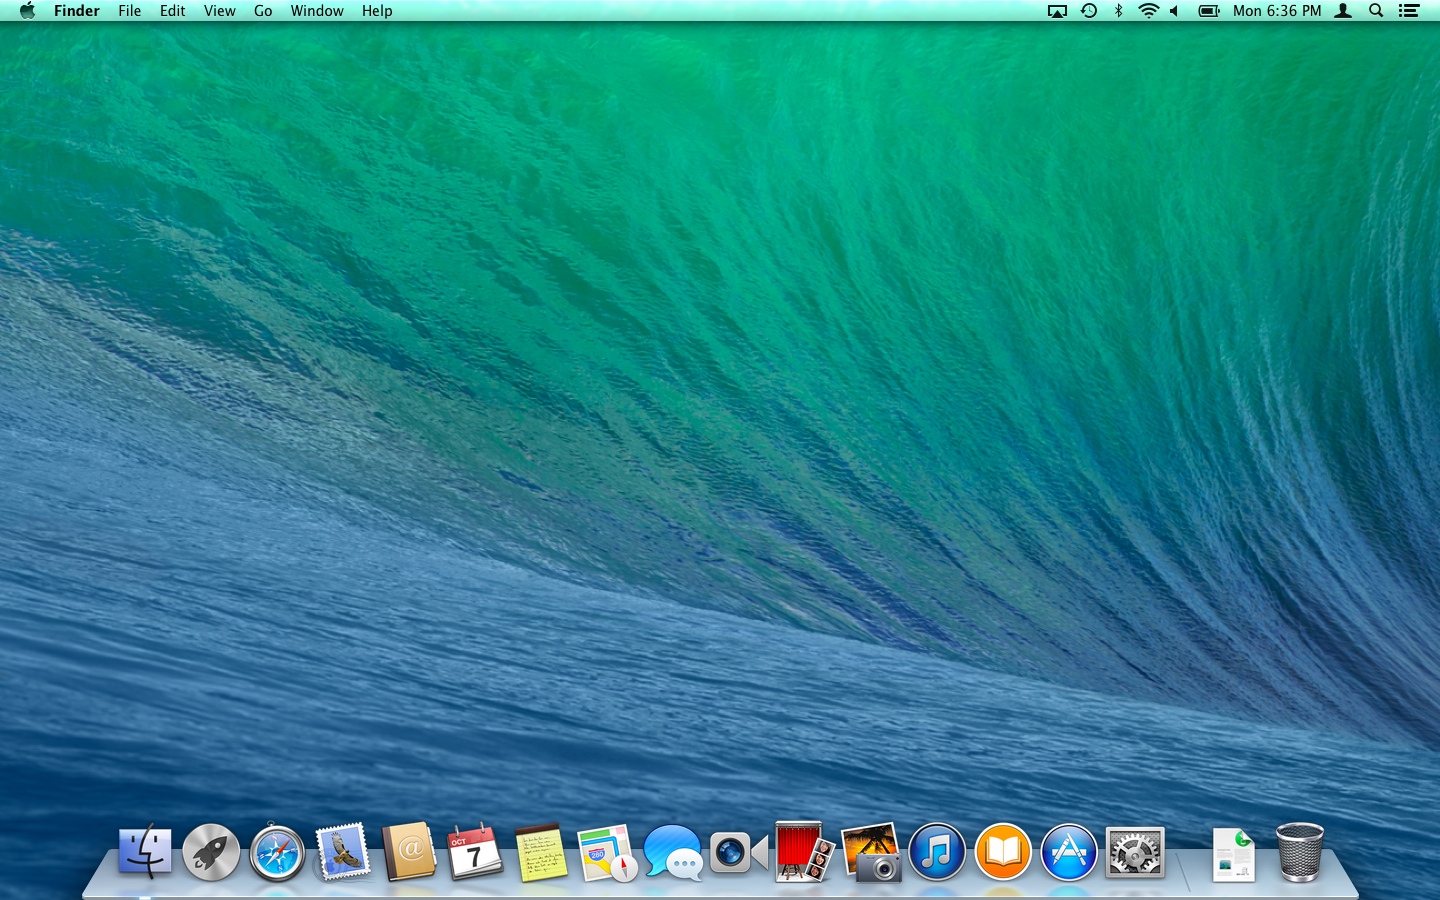 os x mavericks wallpaper,operating system,green,screenshot,wave,software